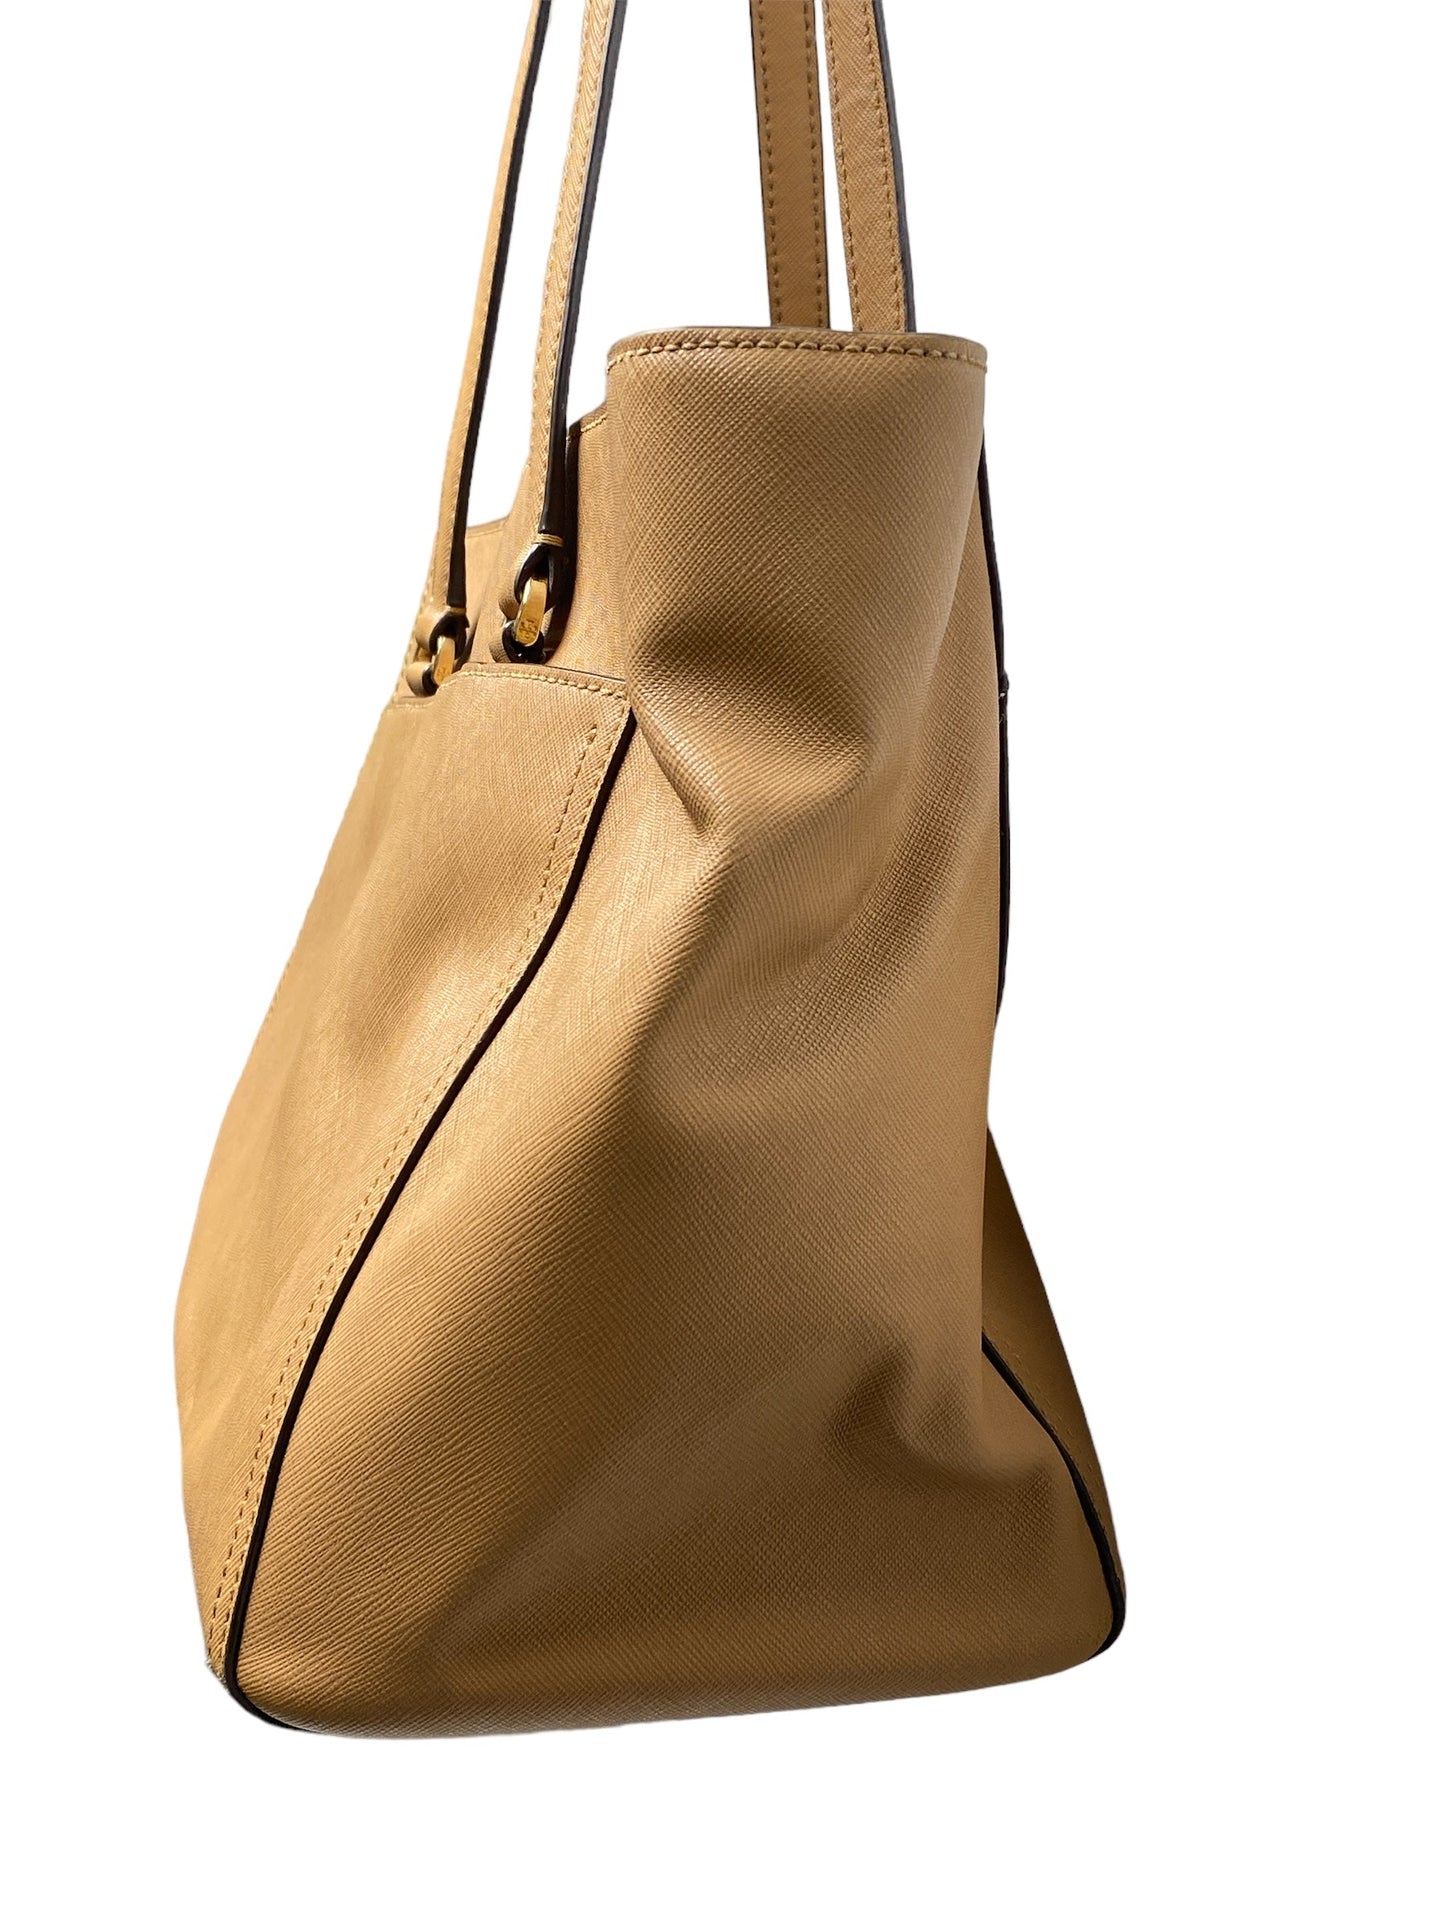 Tan Handbag Designer Tory Burch, Size Large